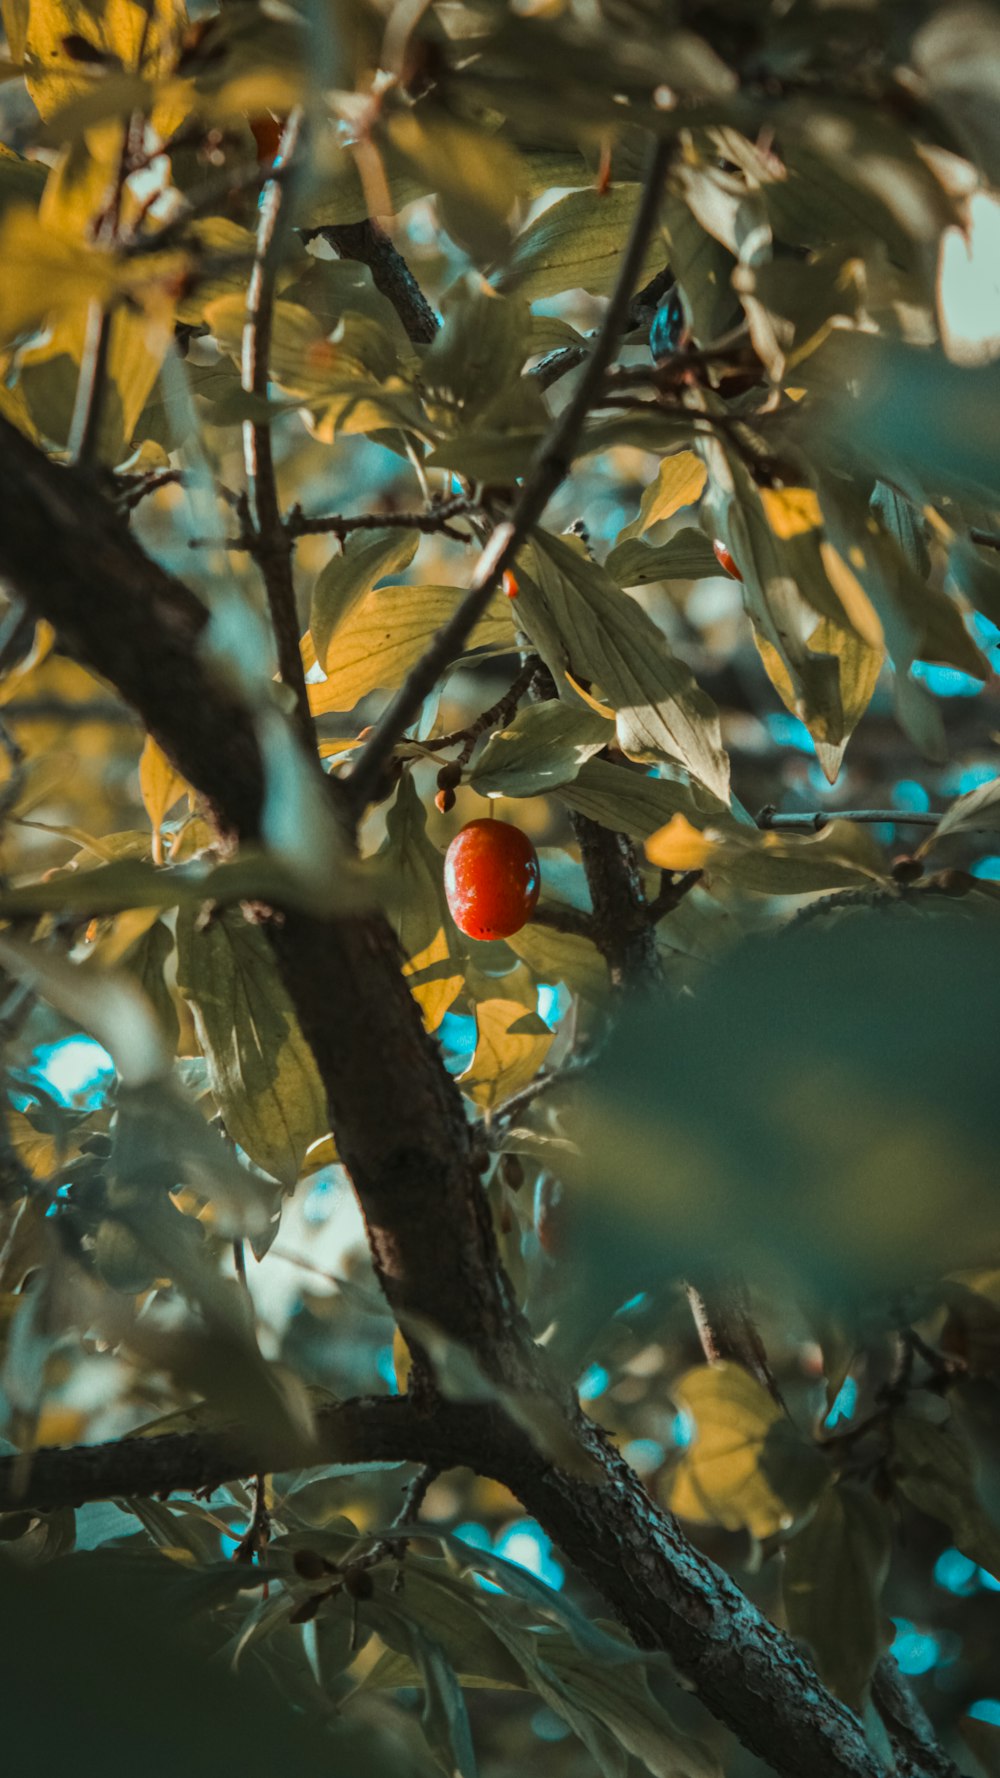 Red round fruit on tree photo – Free Azərbaycan Image on Unsplash